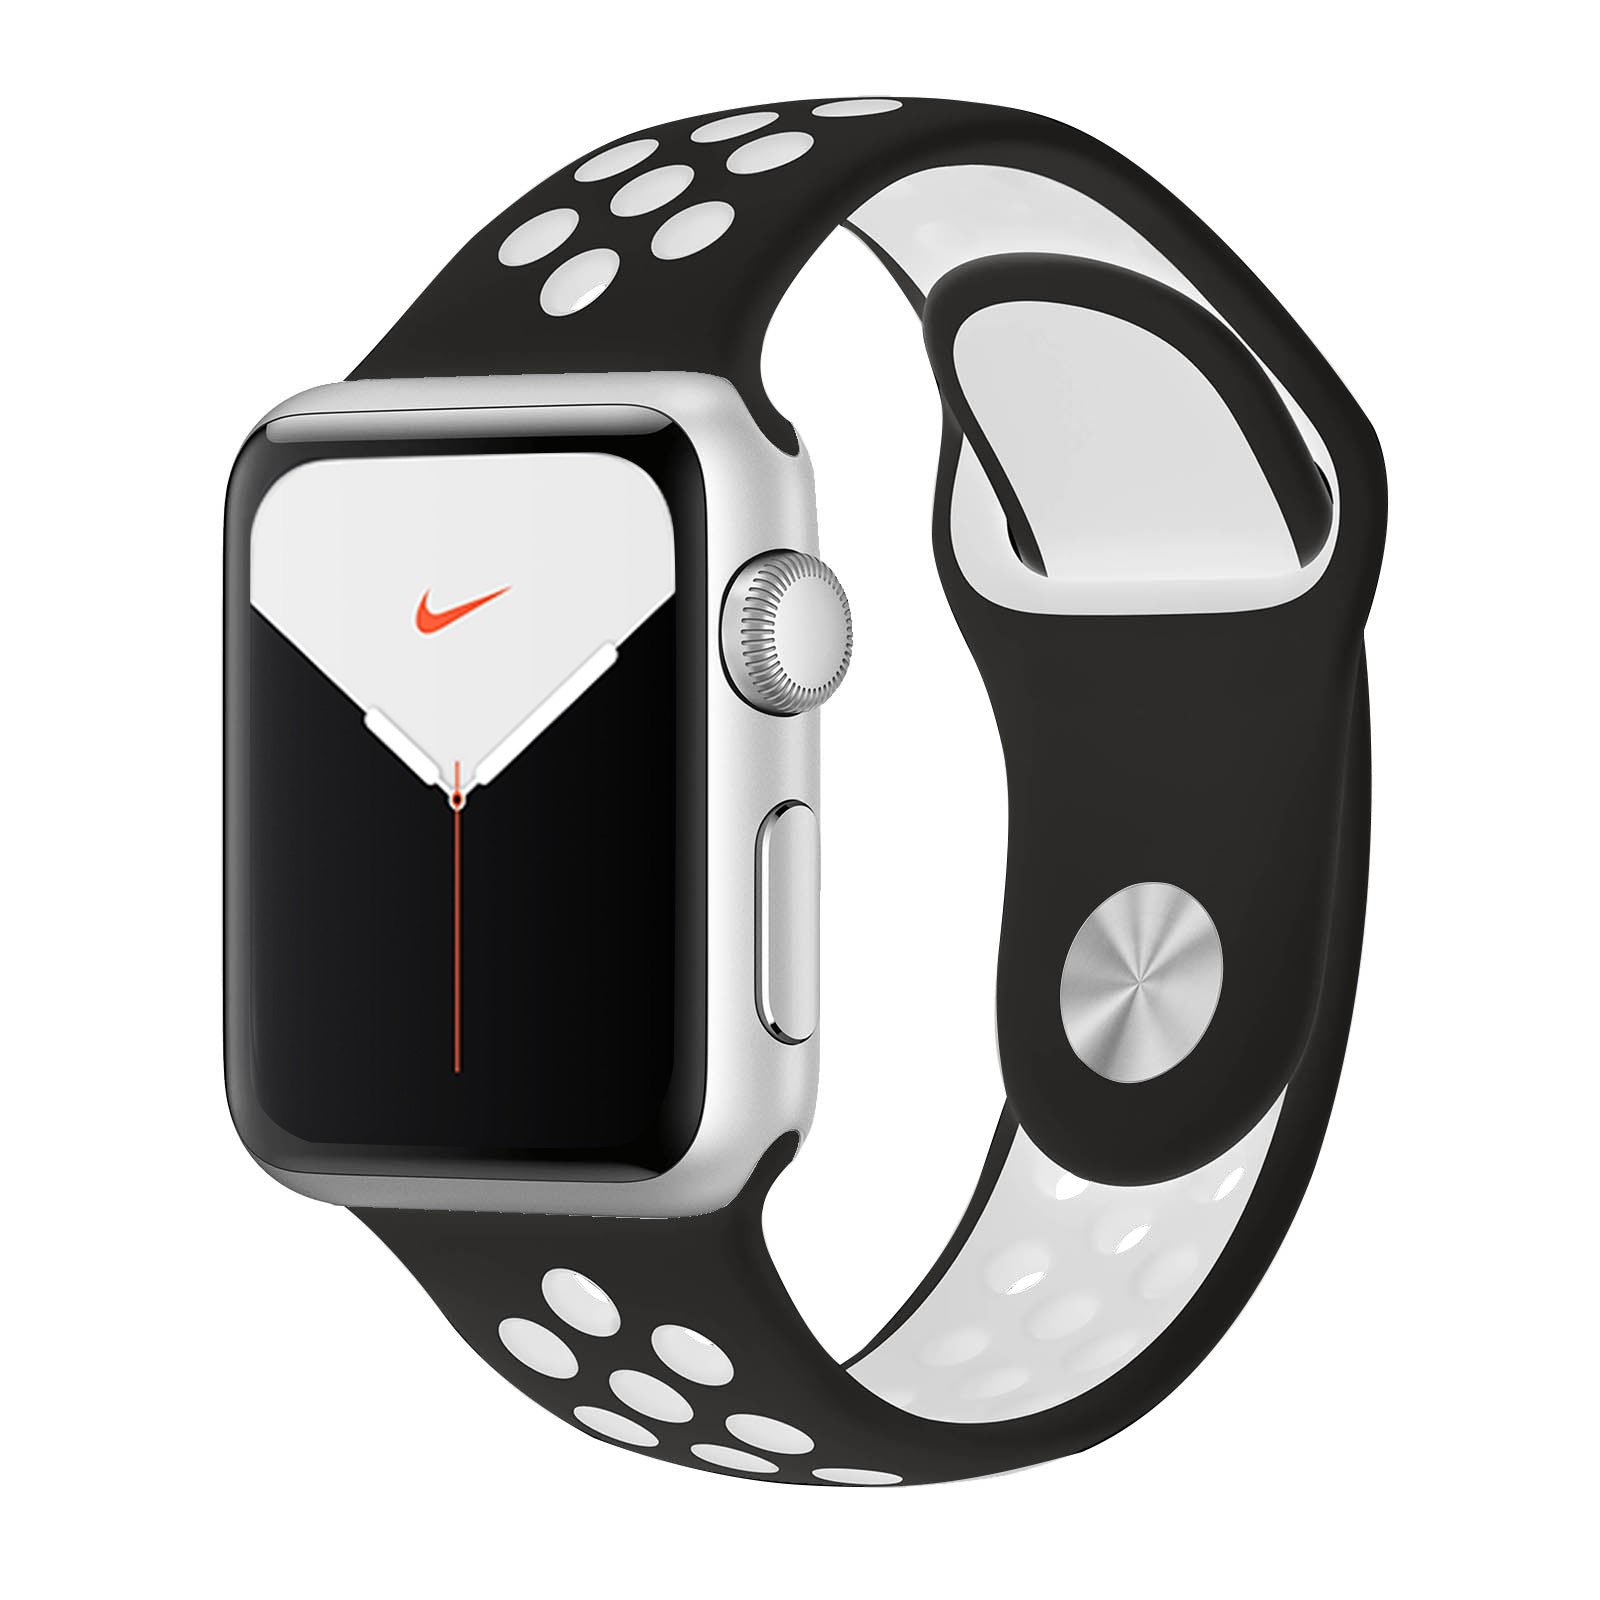 Apple Watch Series 5 Nike Aluminum 40mm Silver Good - Unlocked 40mm Silver Good